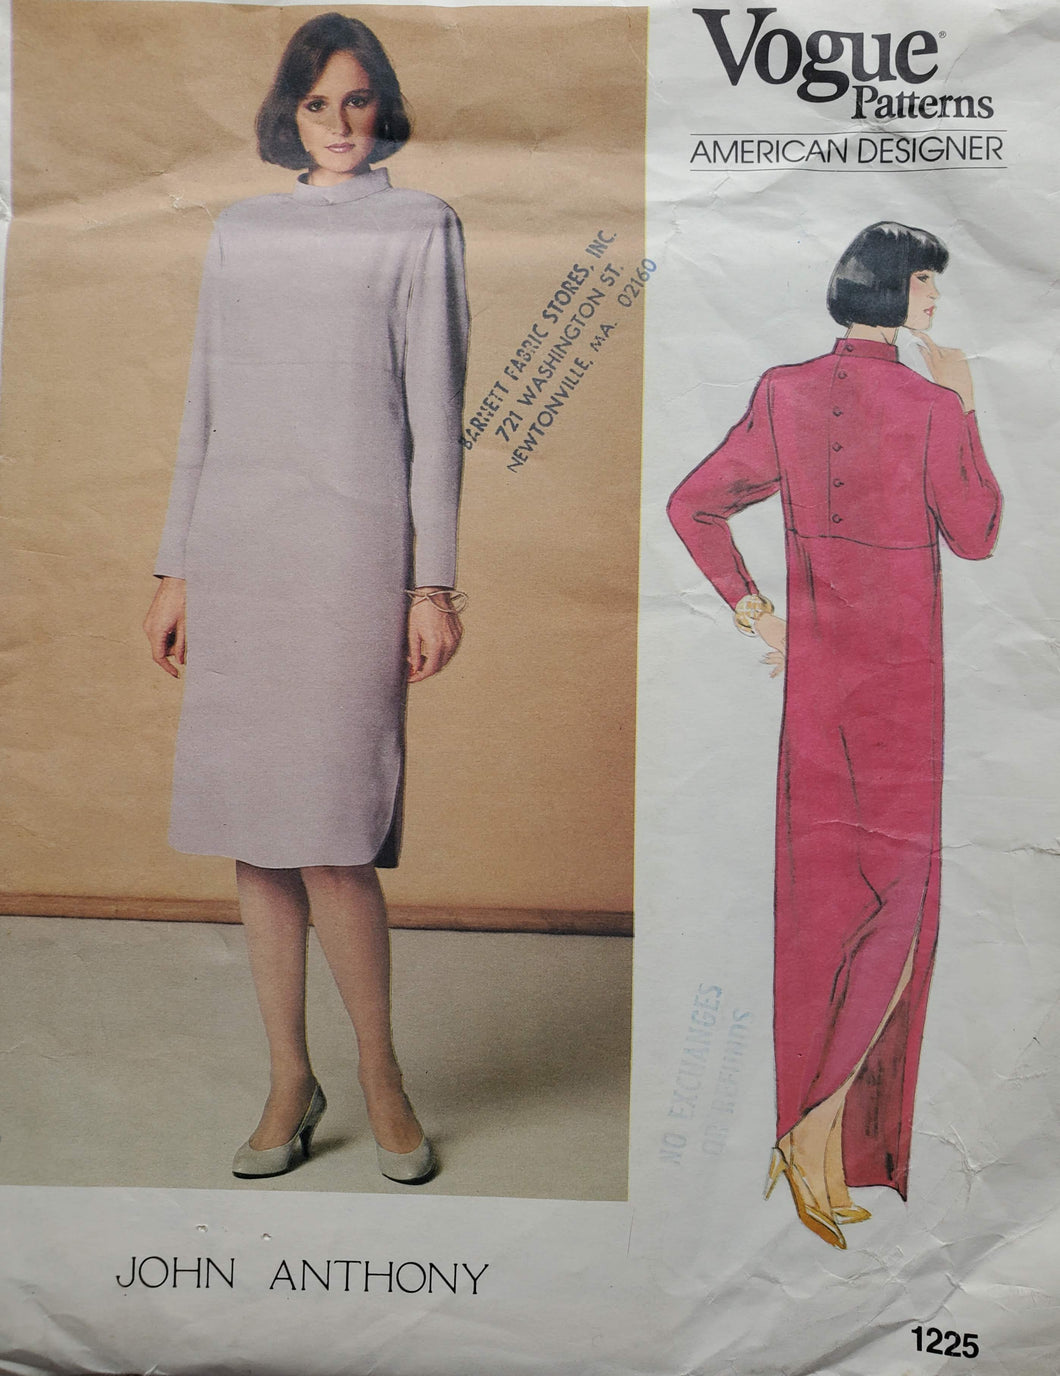 Vogue Pattern 1225, UNCUT, American Designer John Anthony, Misses Dress, Size 8